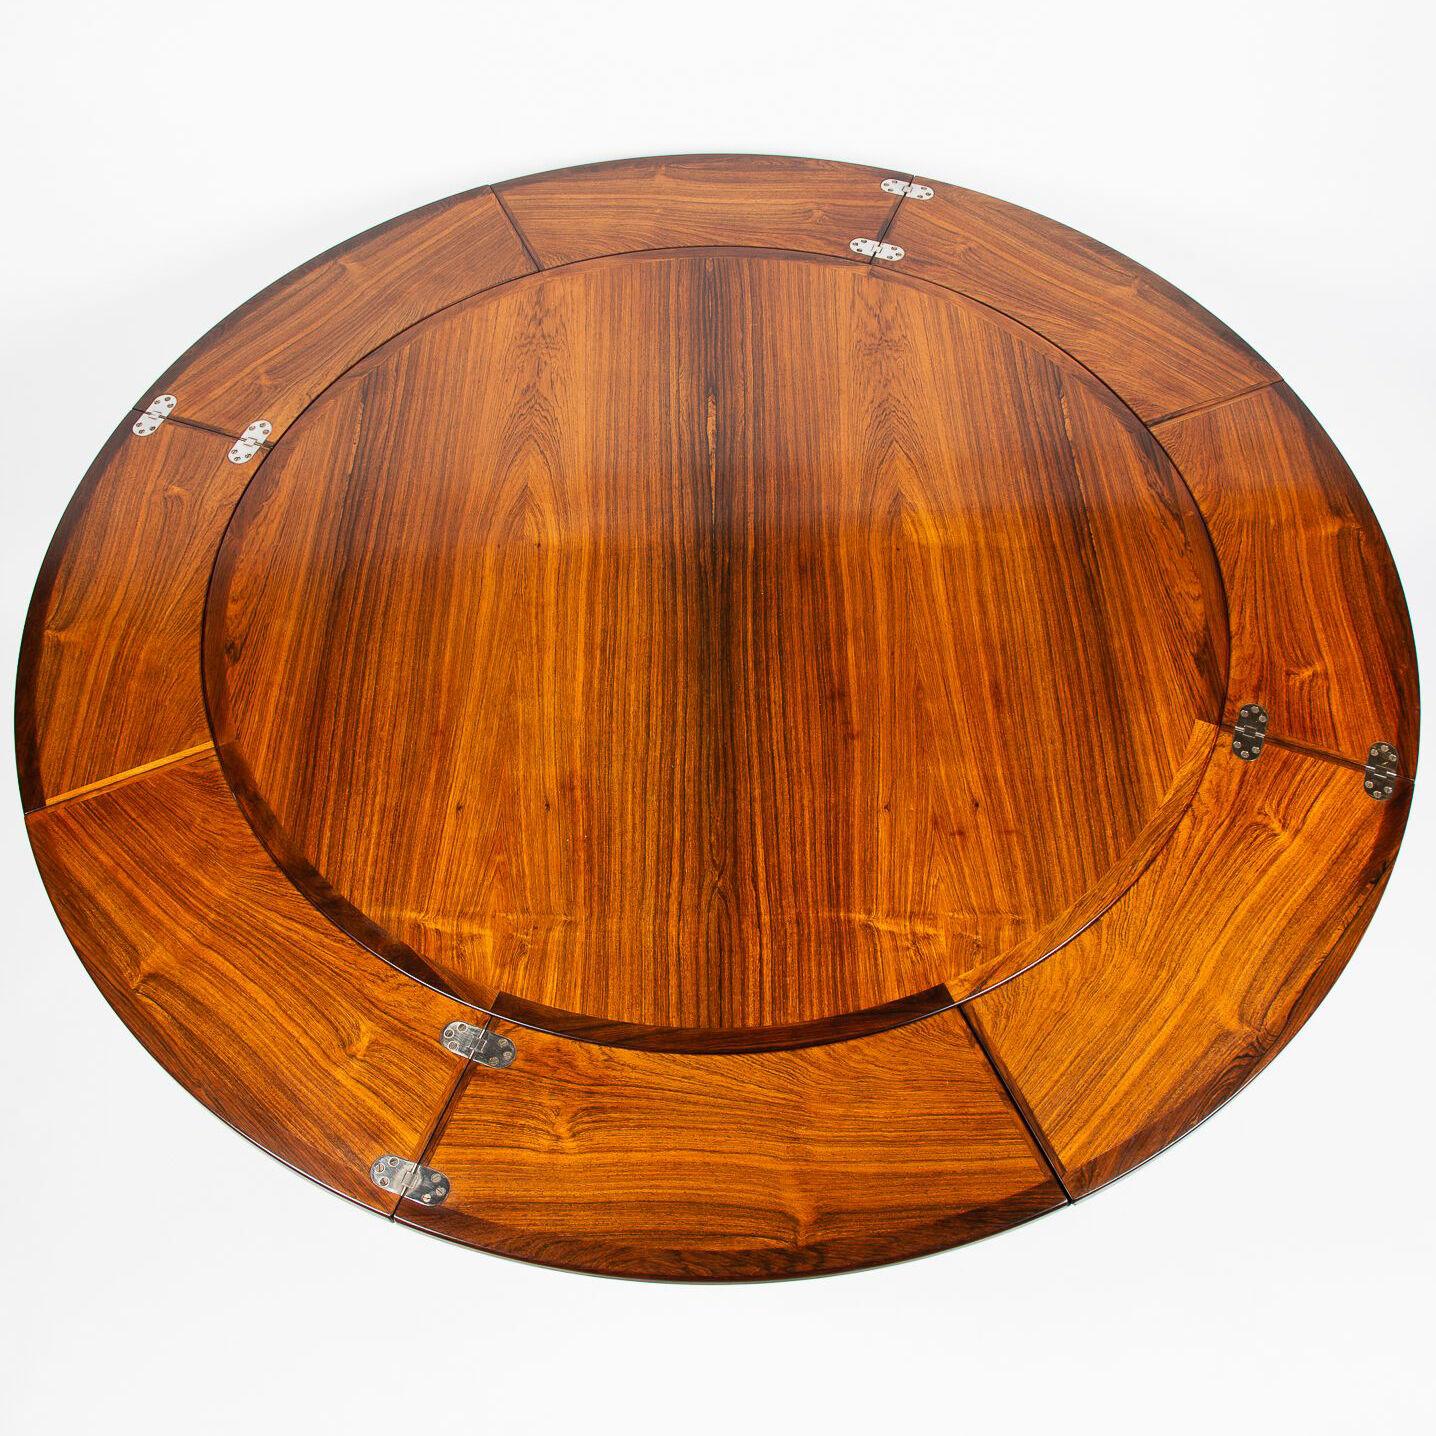 Extending circular table by Dyrlund, circa 1970.